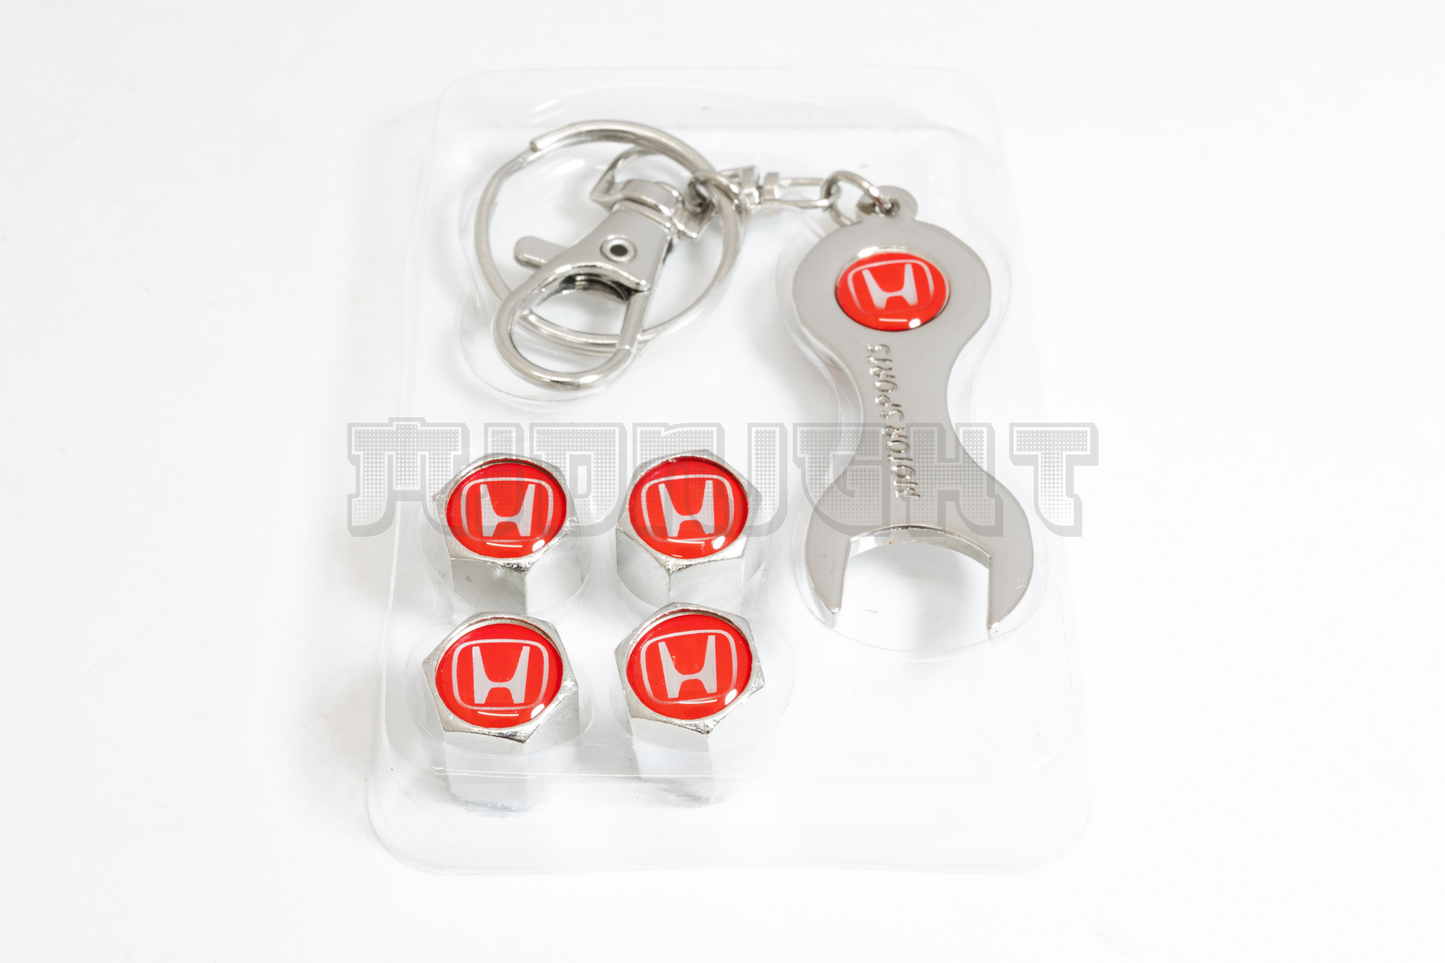 Honda Valve Stem Caps With Wrench Keychain